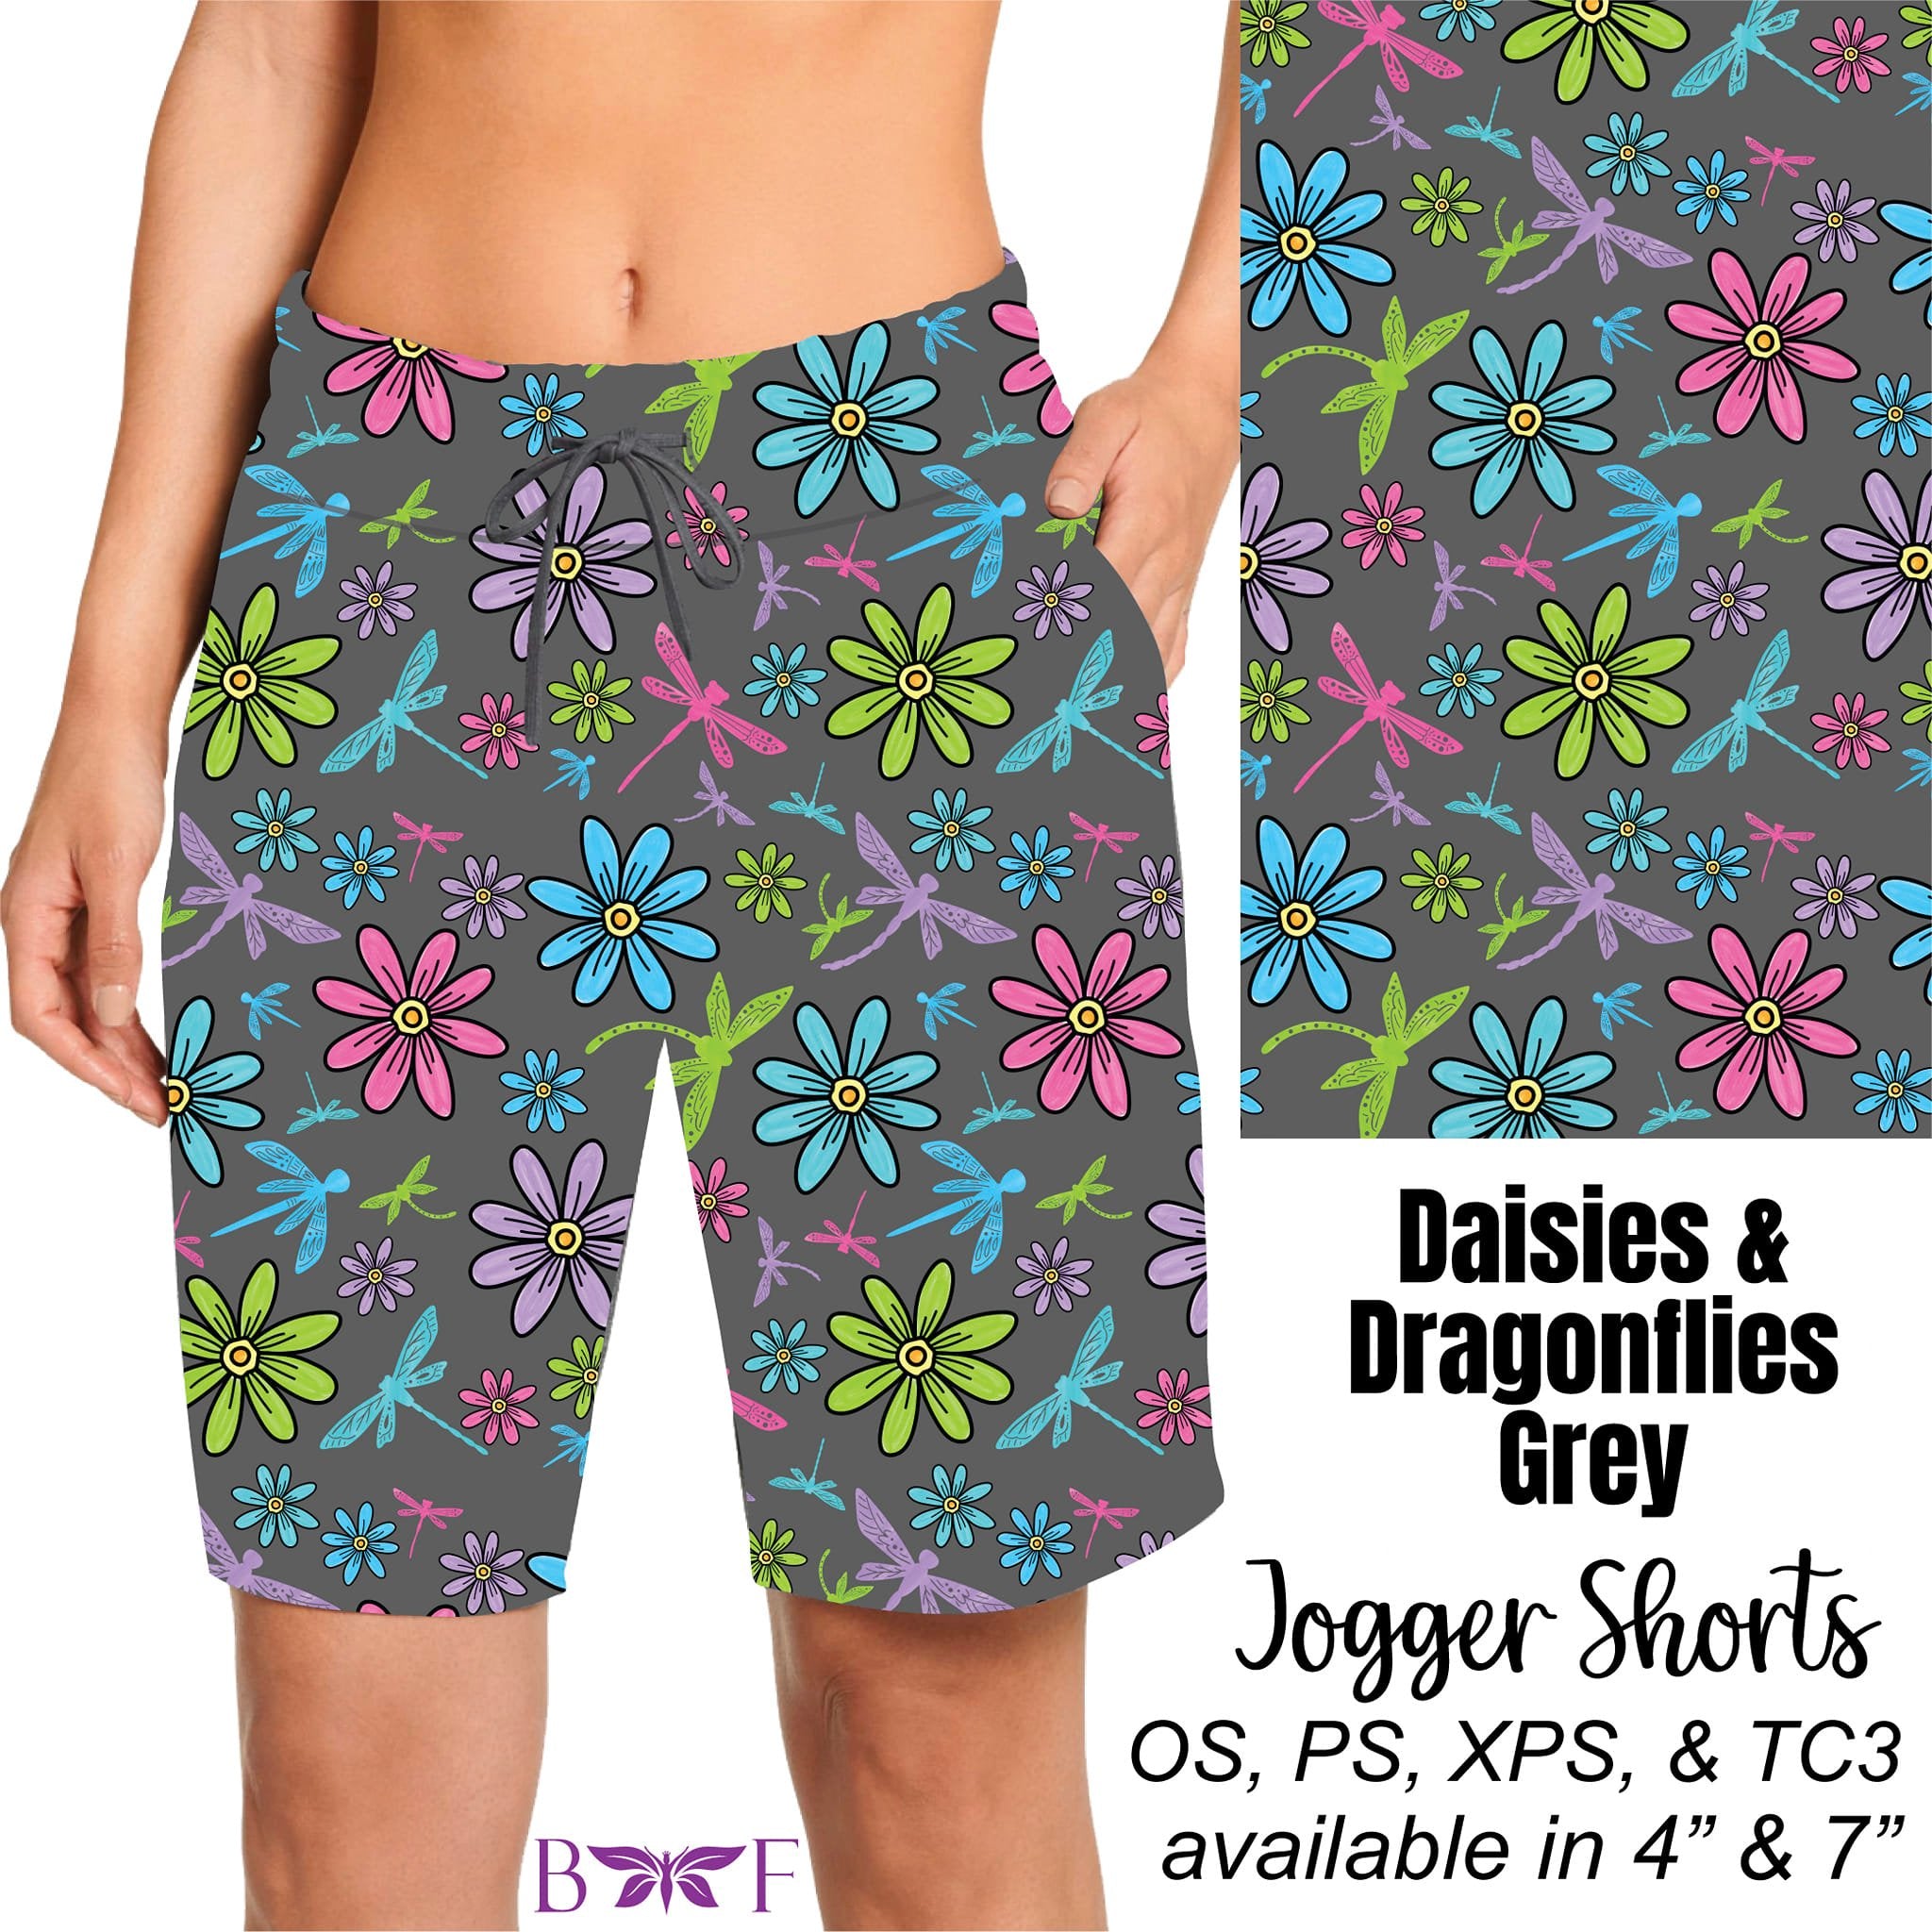 Daisies & Dragonflies Grey Capris and shorts